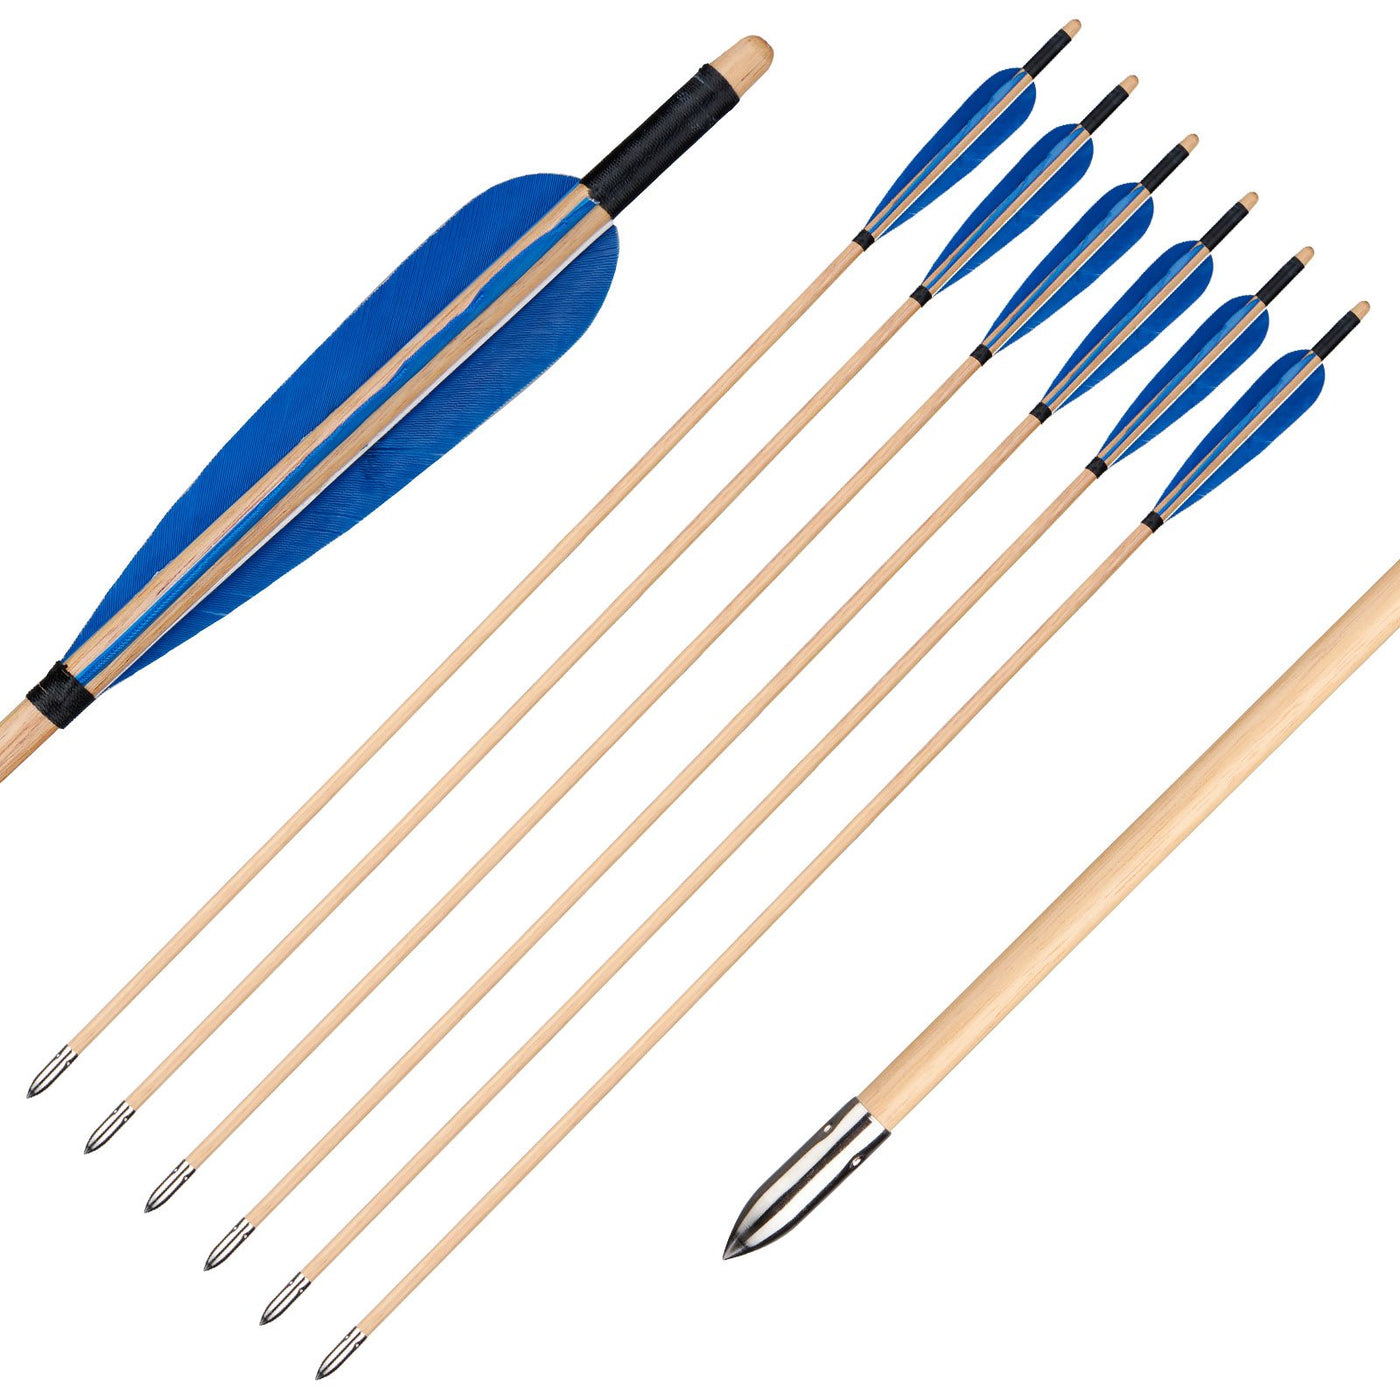 🎯12pcs Traditional Handmade Wood Archery Arrows